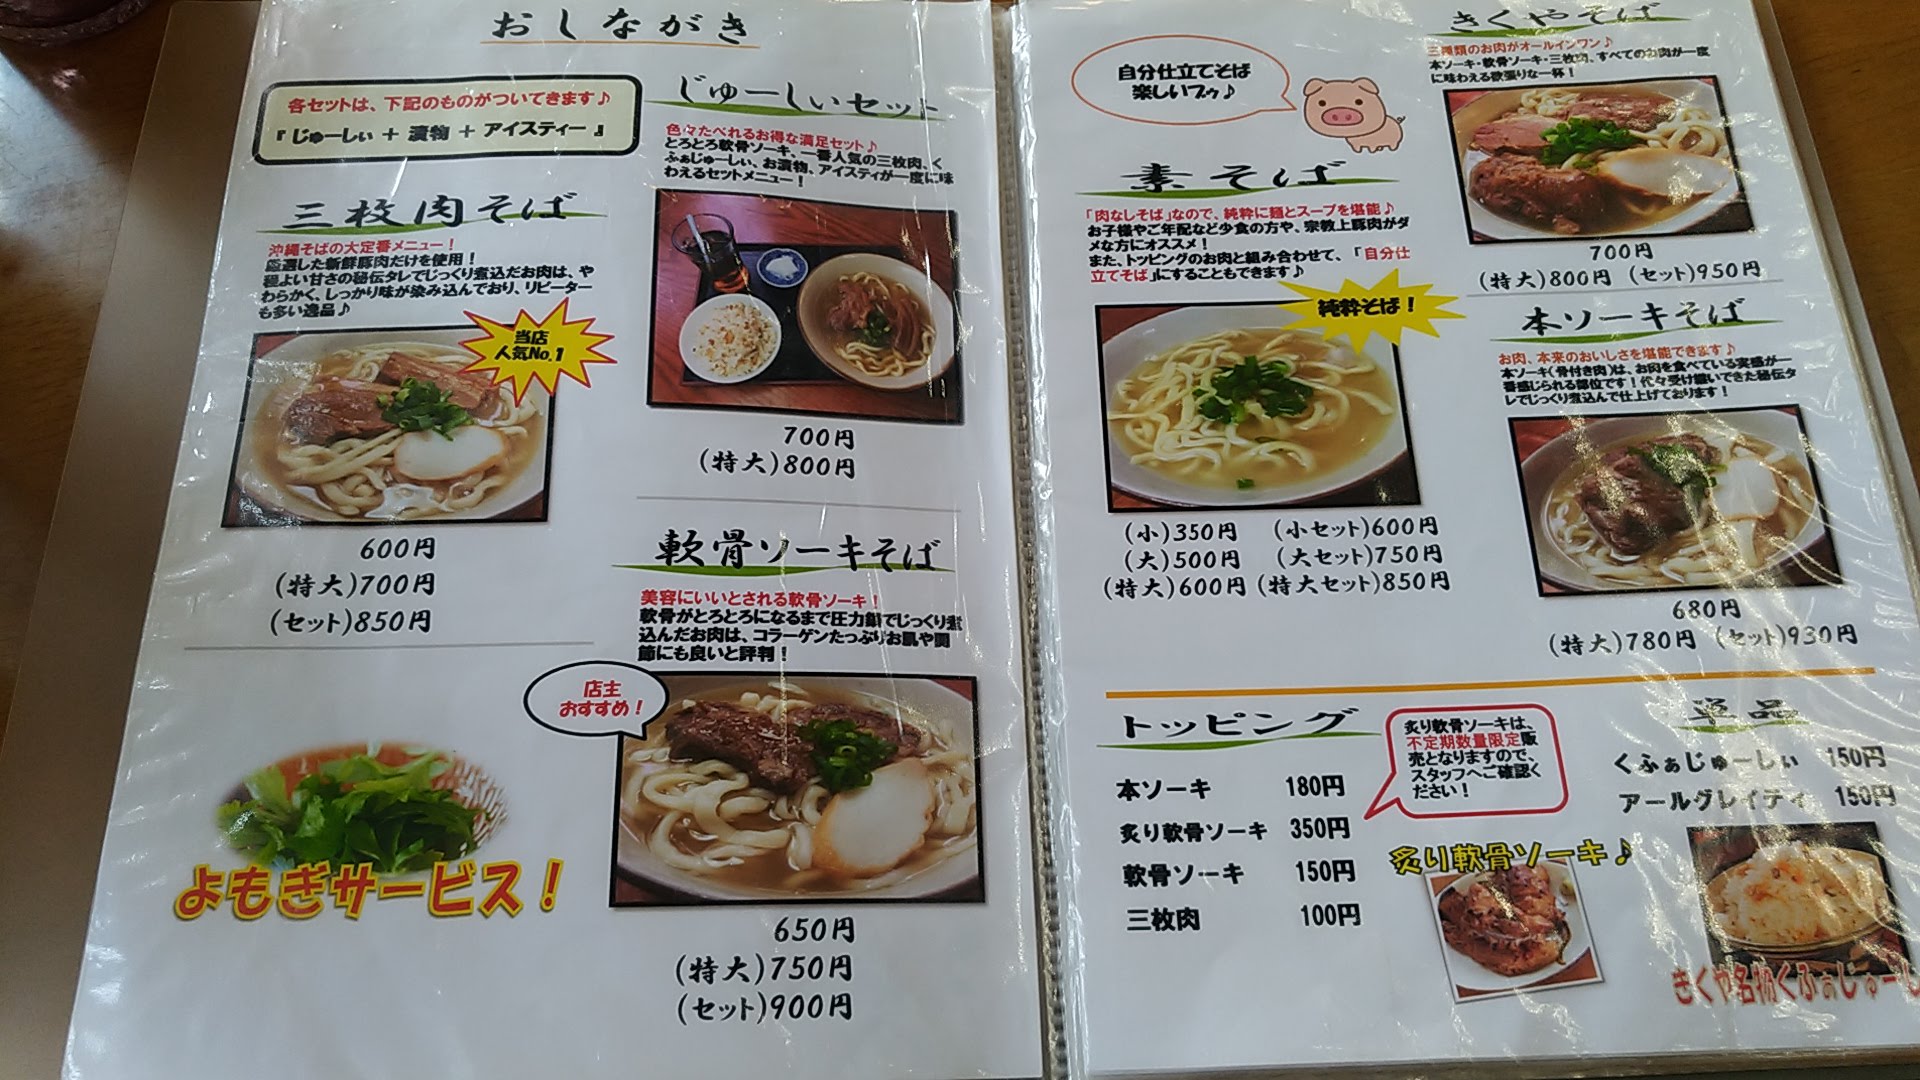 Kikuya's menu 1